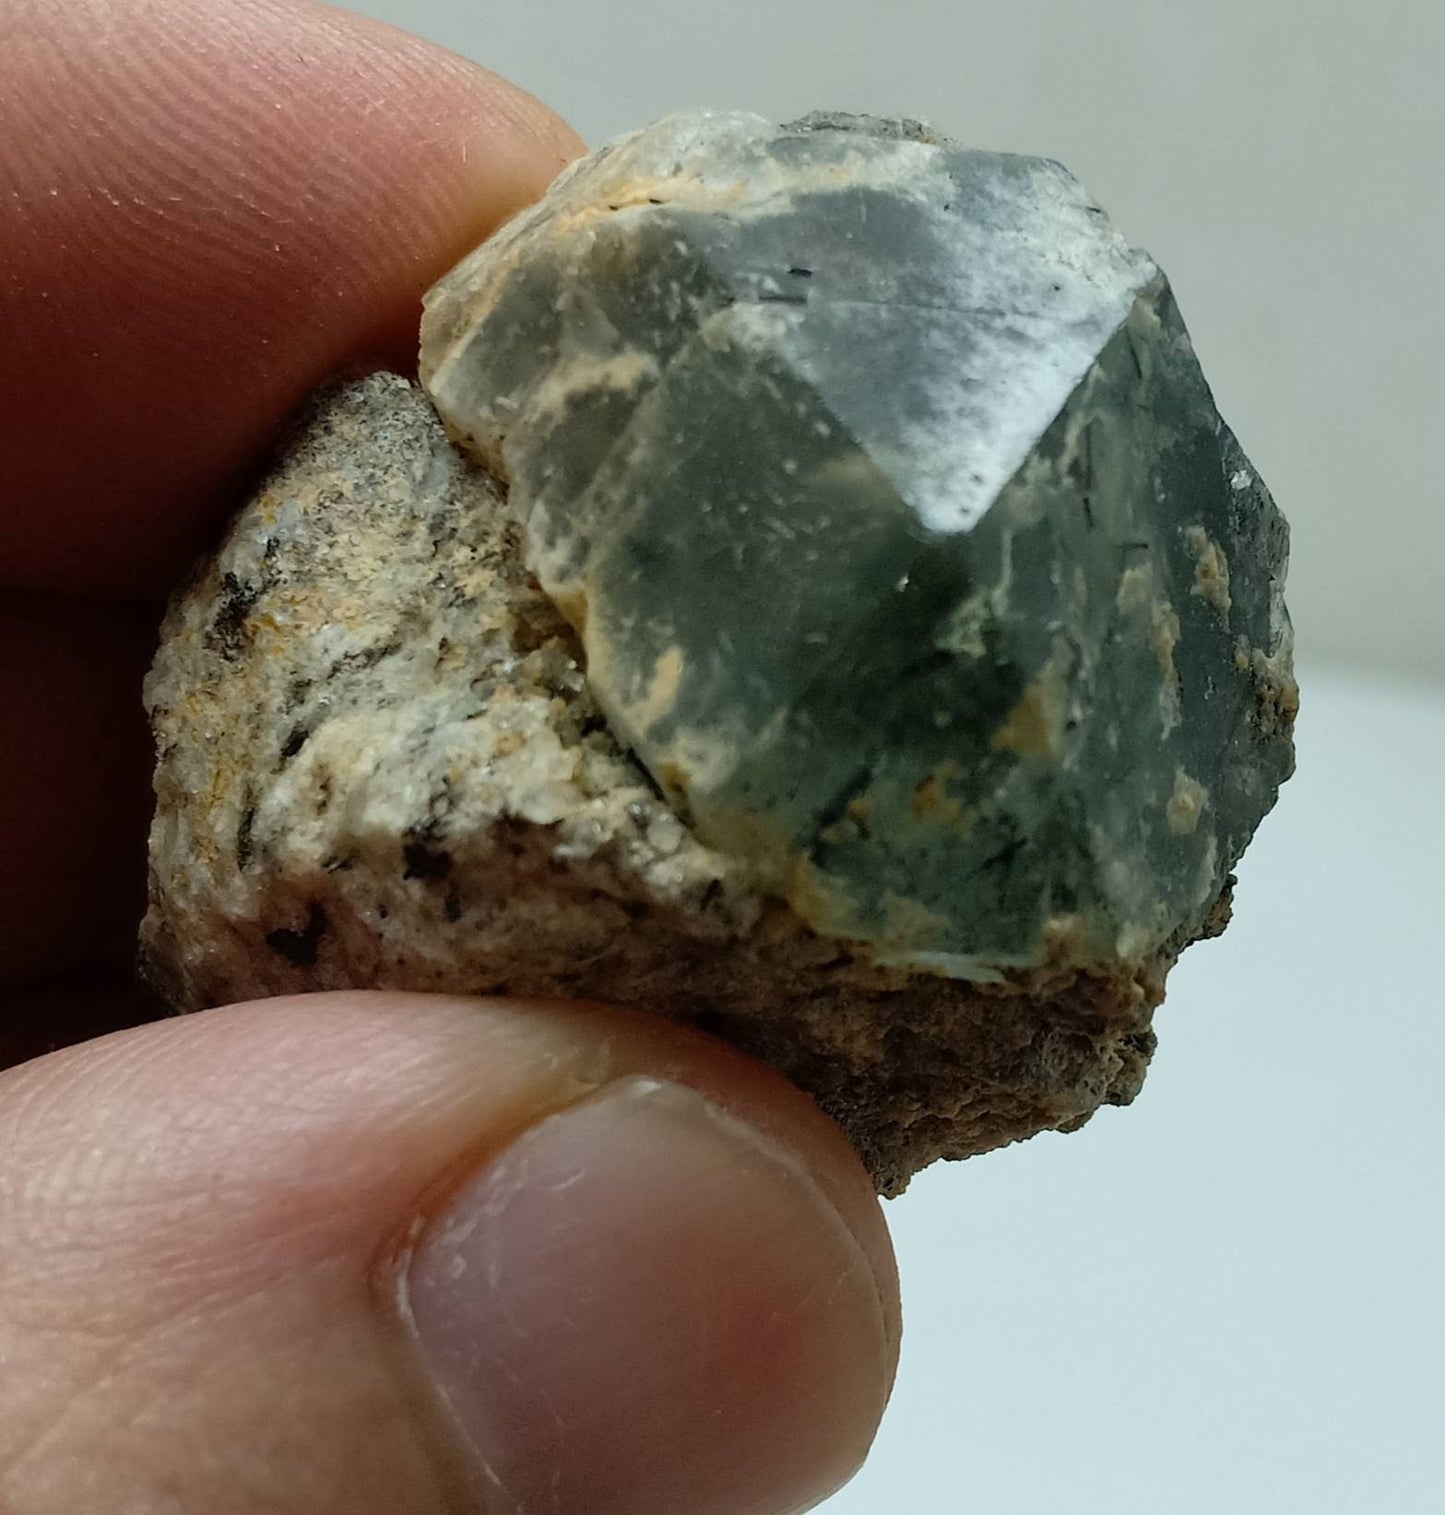 Green Fluorite Crystal specimen with aegirine inclusions on matrix of granite 39 grams